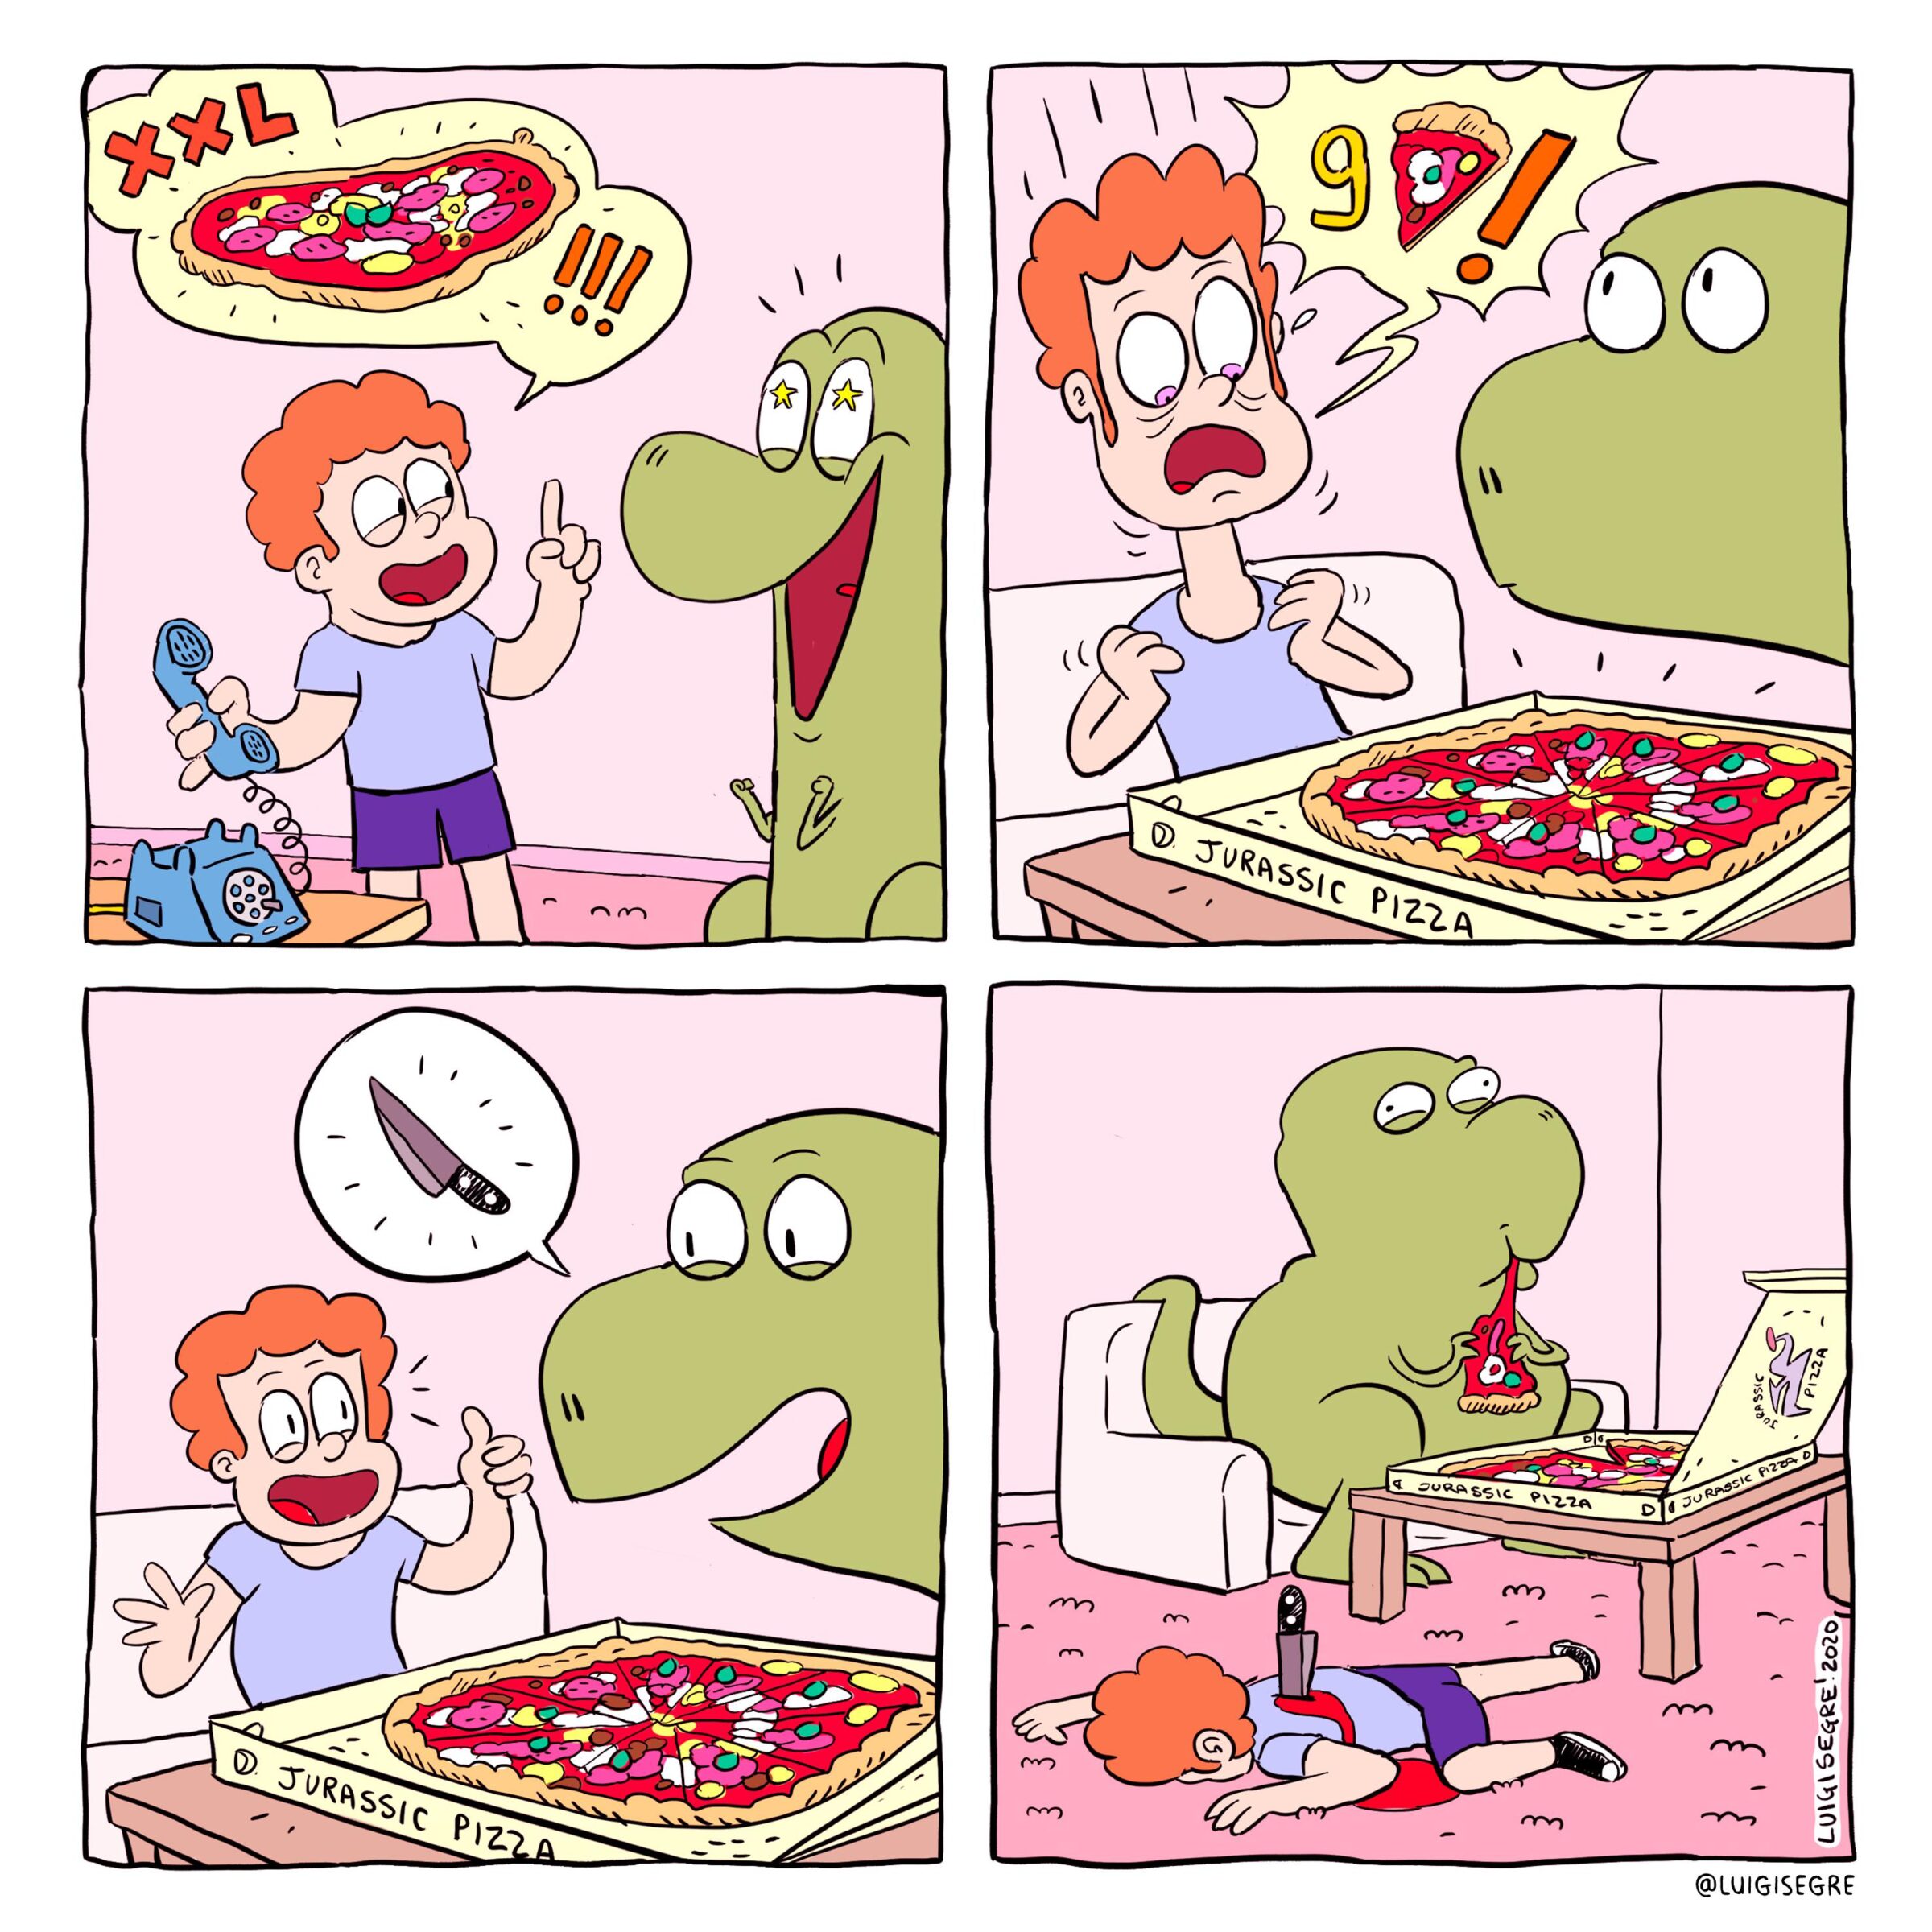 Xxl pizza (from luigi_segre), Step Comics Xxl pizza (from luigi_segre), Step text: PIZZA r VRRSSlc Plz @IUIGISEGRE 